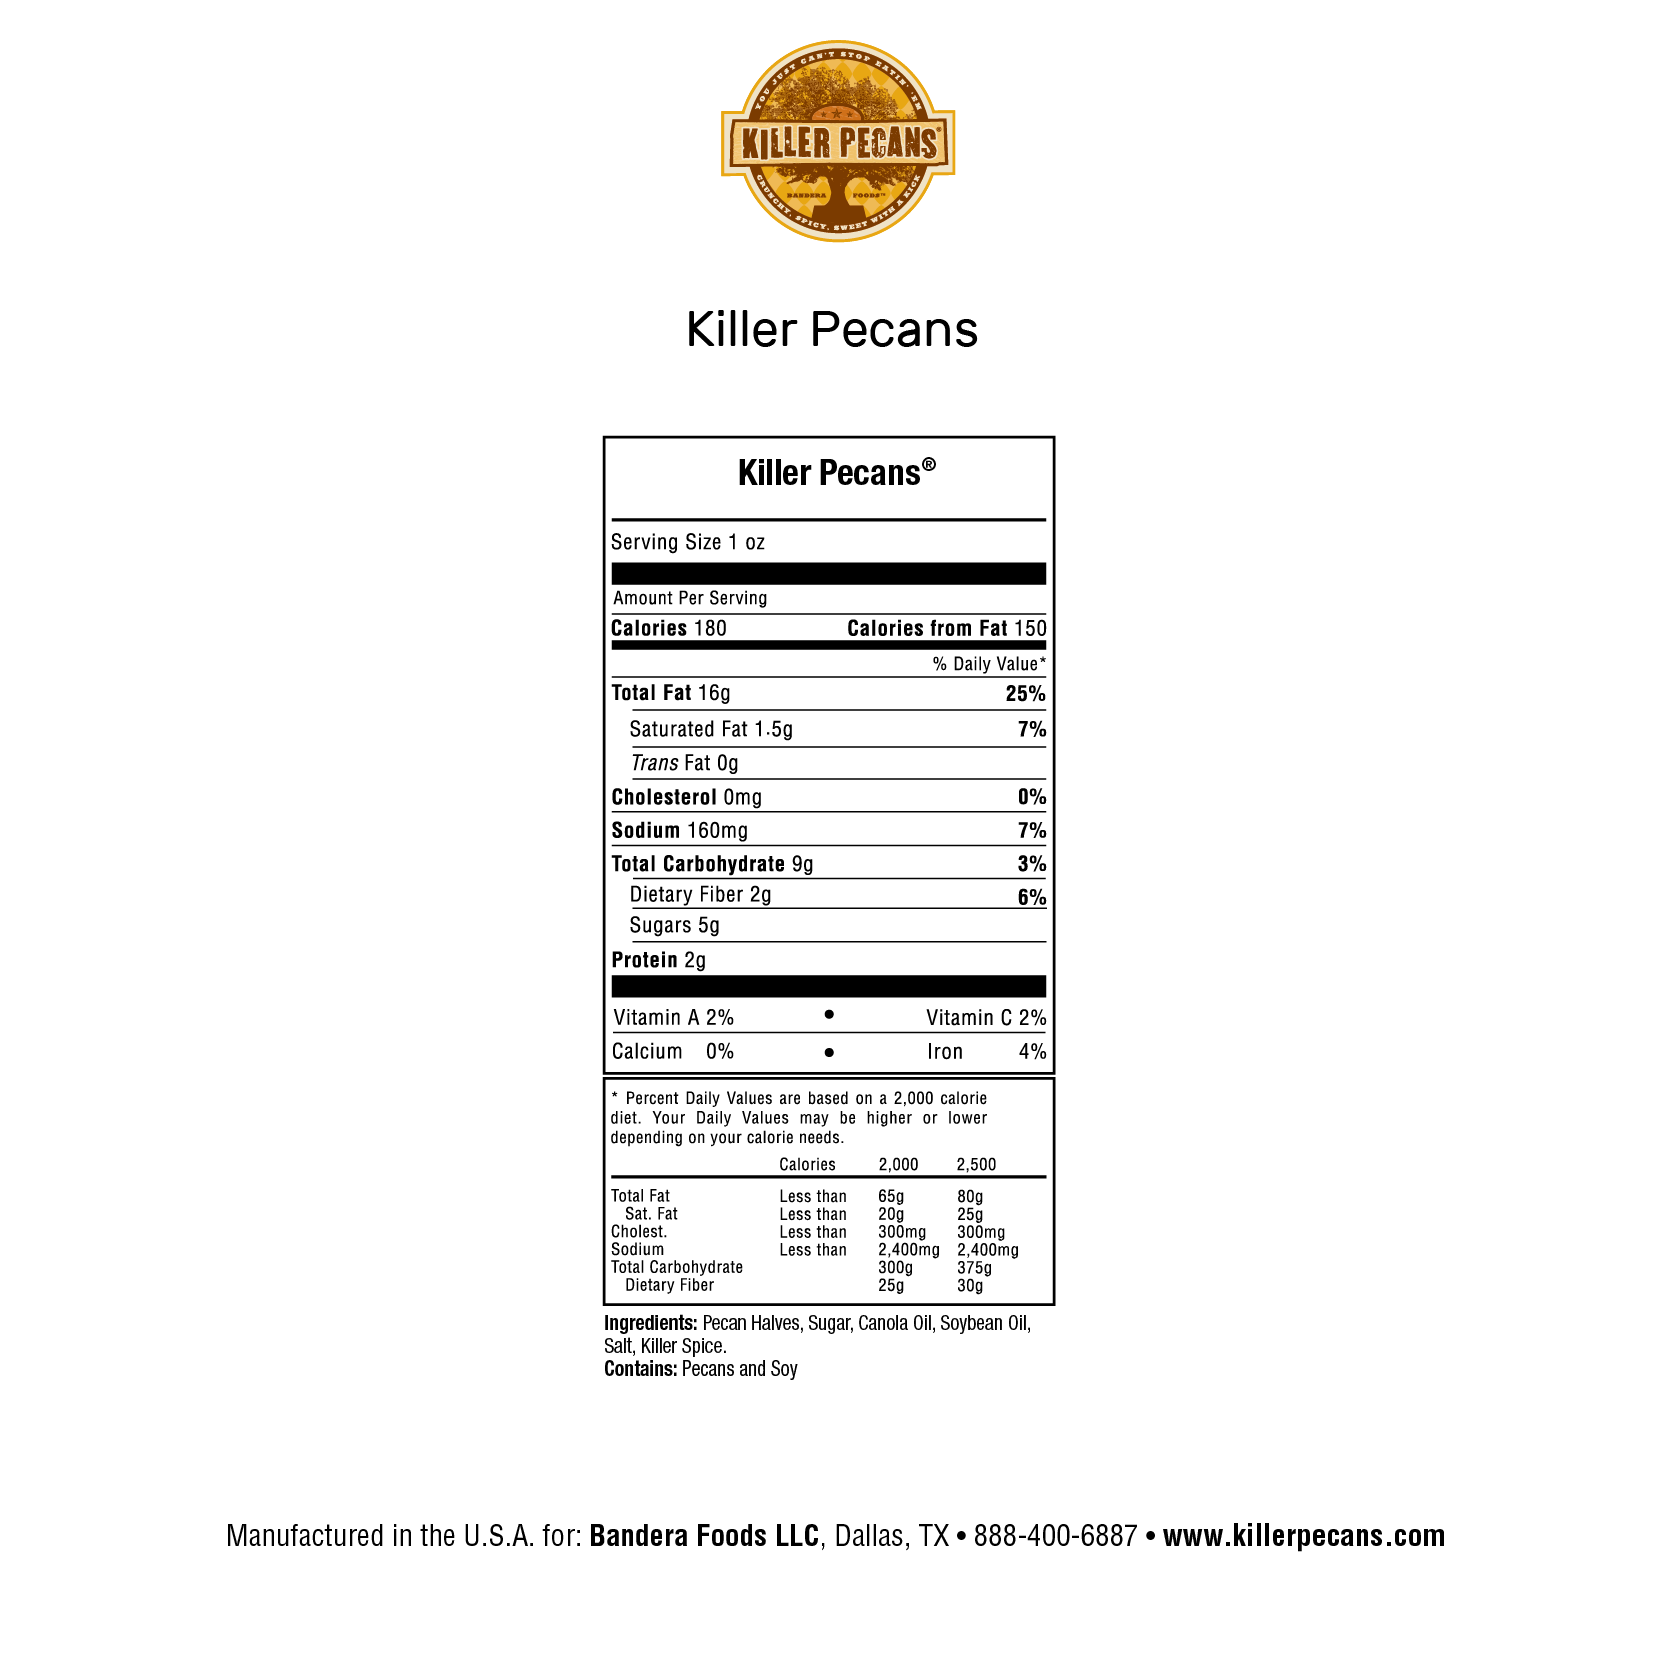 Texas Trio Tin – 5 oz Killer Pecans, 5 oz Cinnamon Pecans and 7 oz Dark Chocolate Dipped Killer Pecans. Nutrition Panel